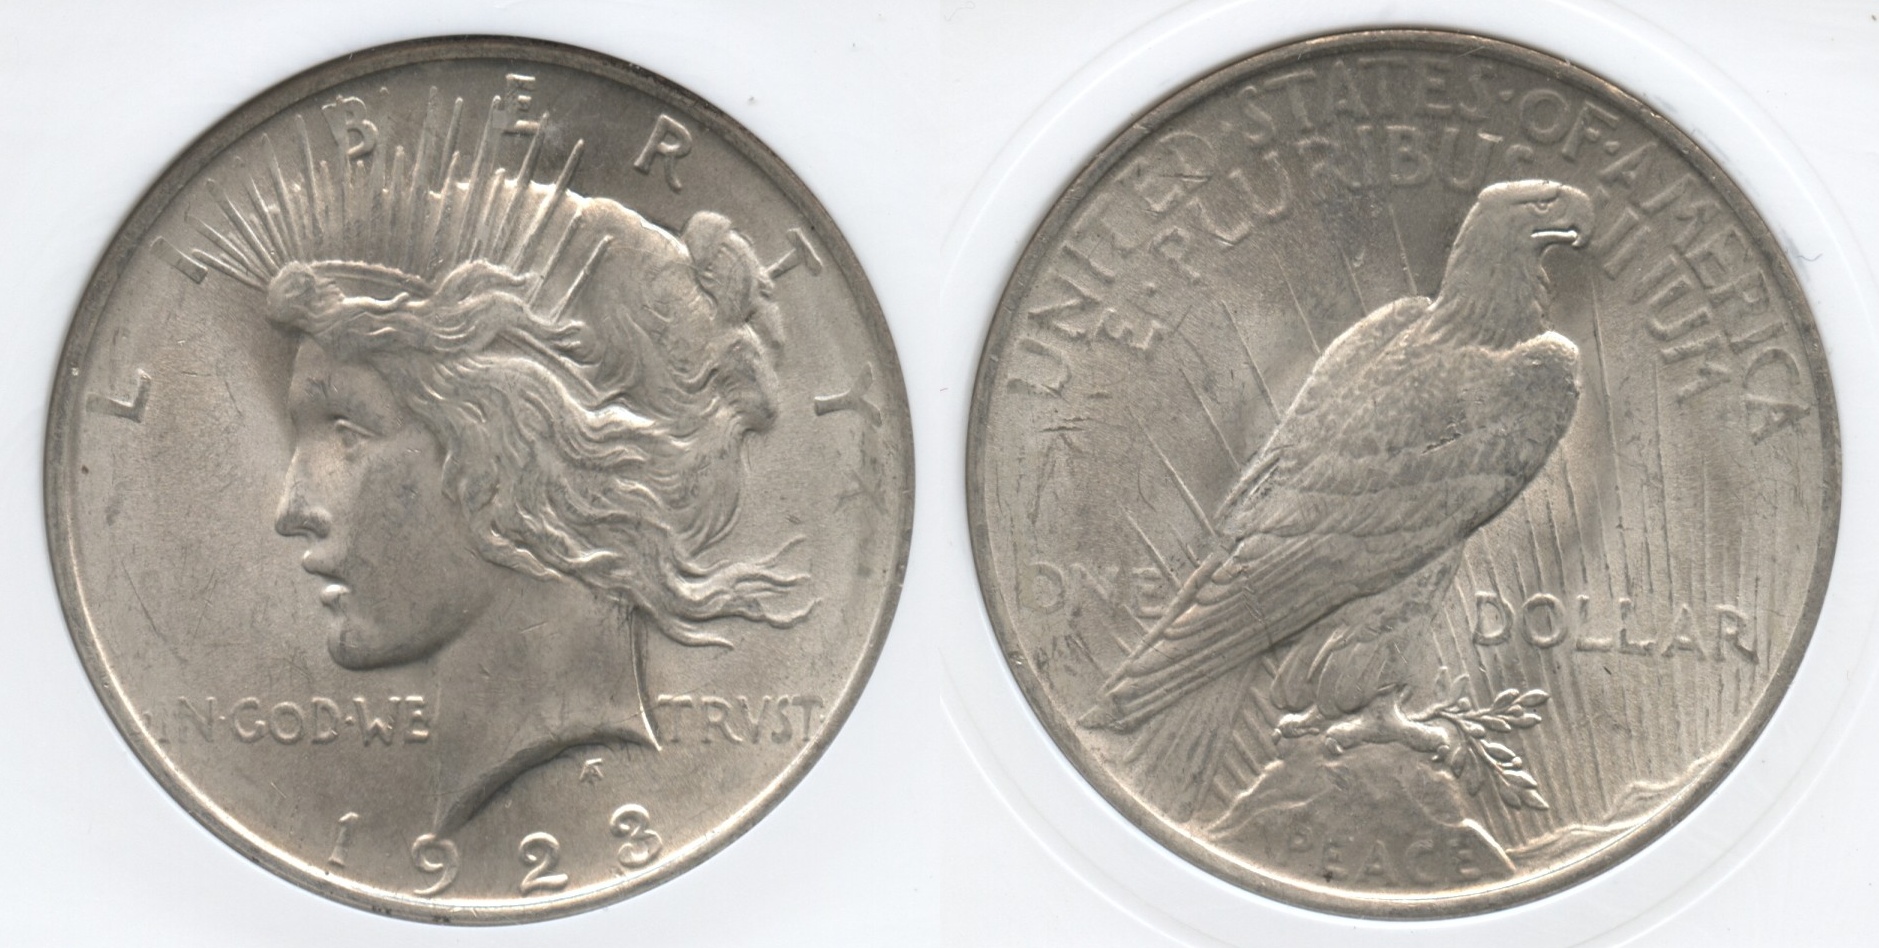 1923 Peace Silver Dollar PCI MS-64 #d